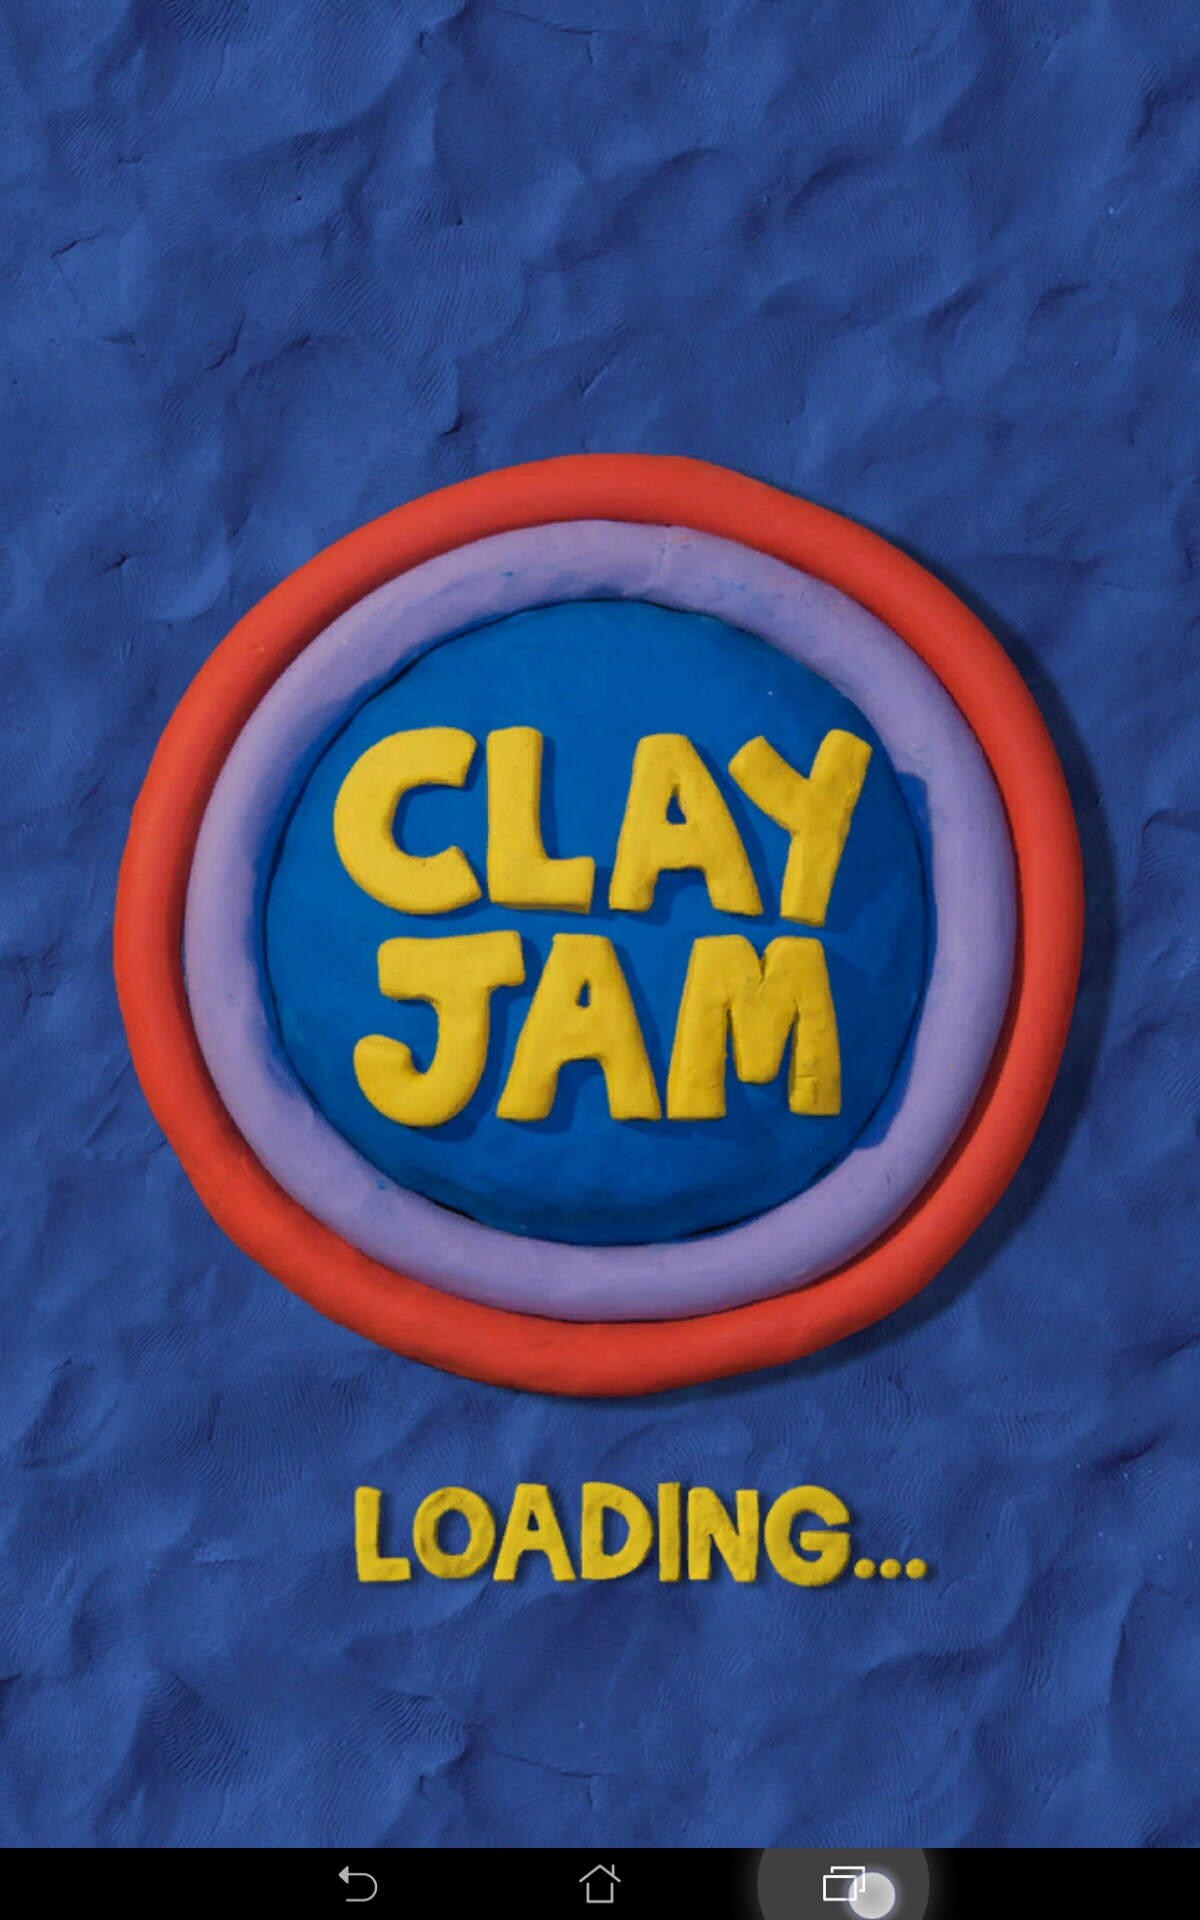 Clay Jam loading screen